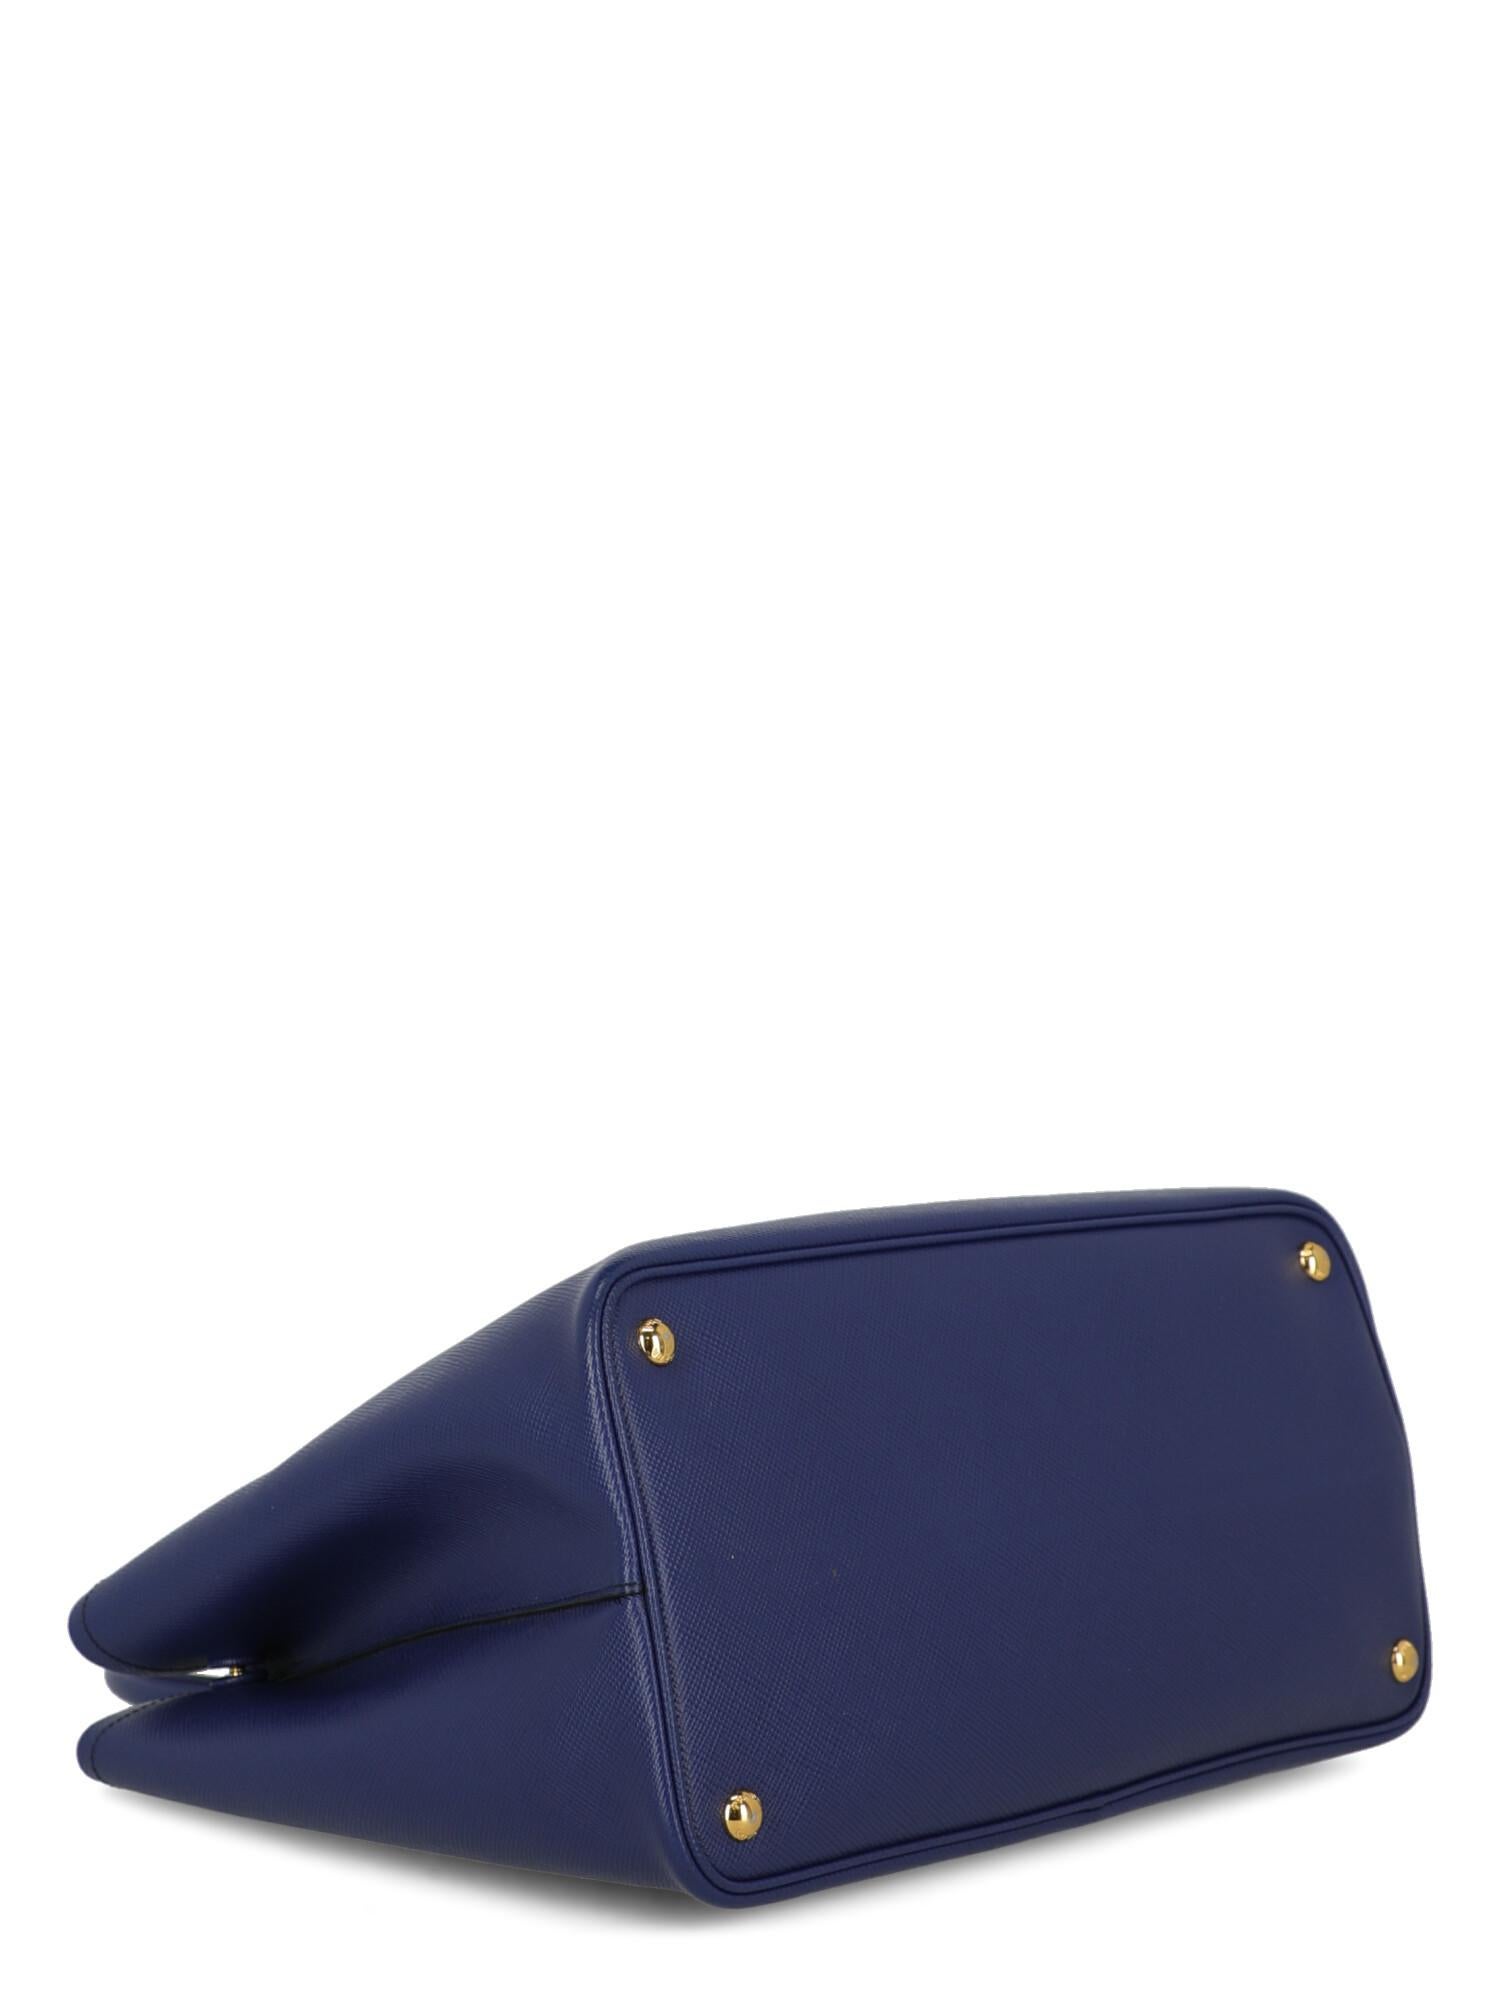 Purple Prada Woman Handbag Double Navy Leather For Sale